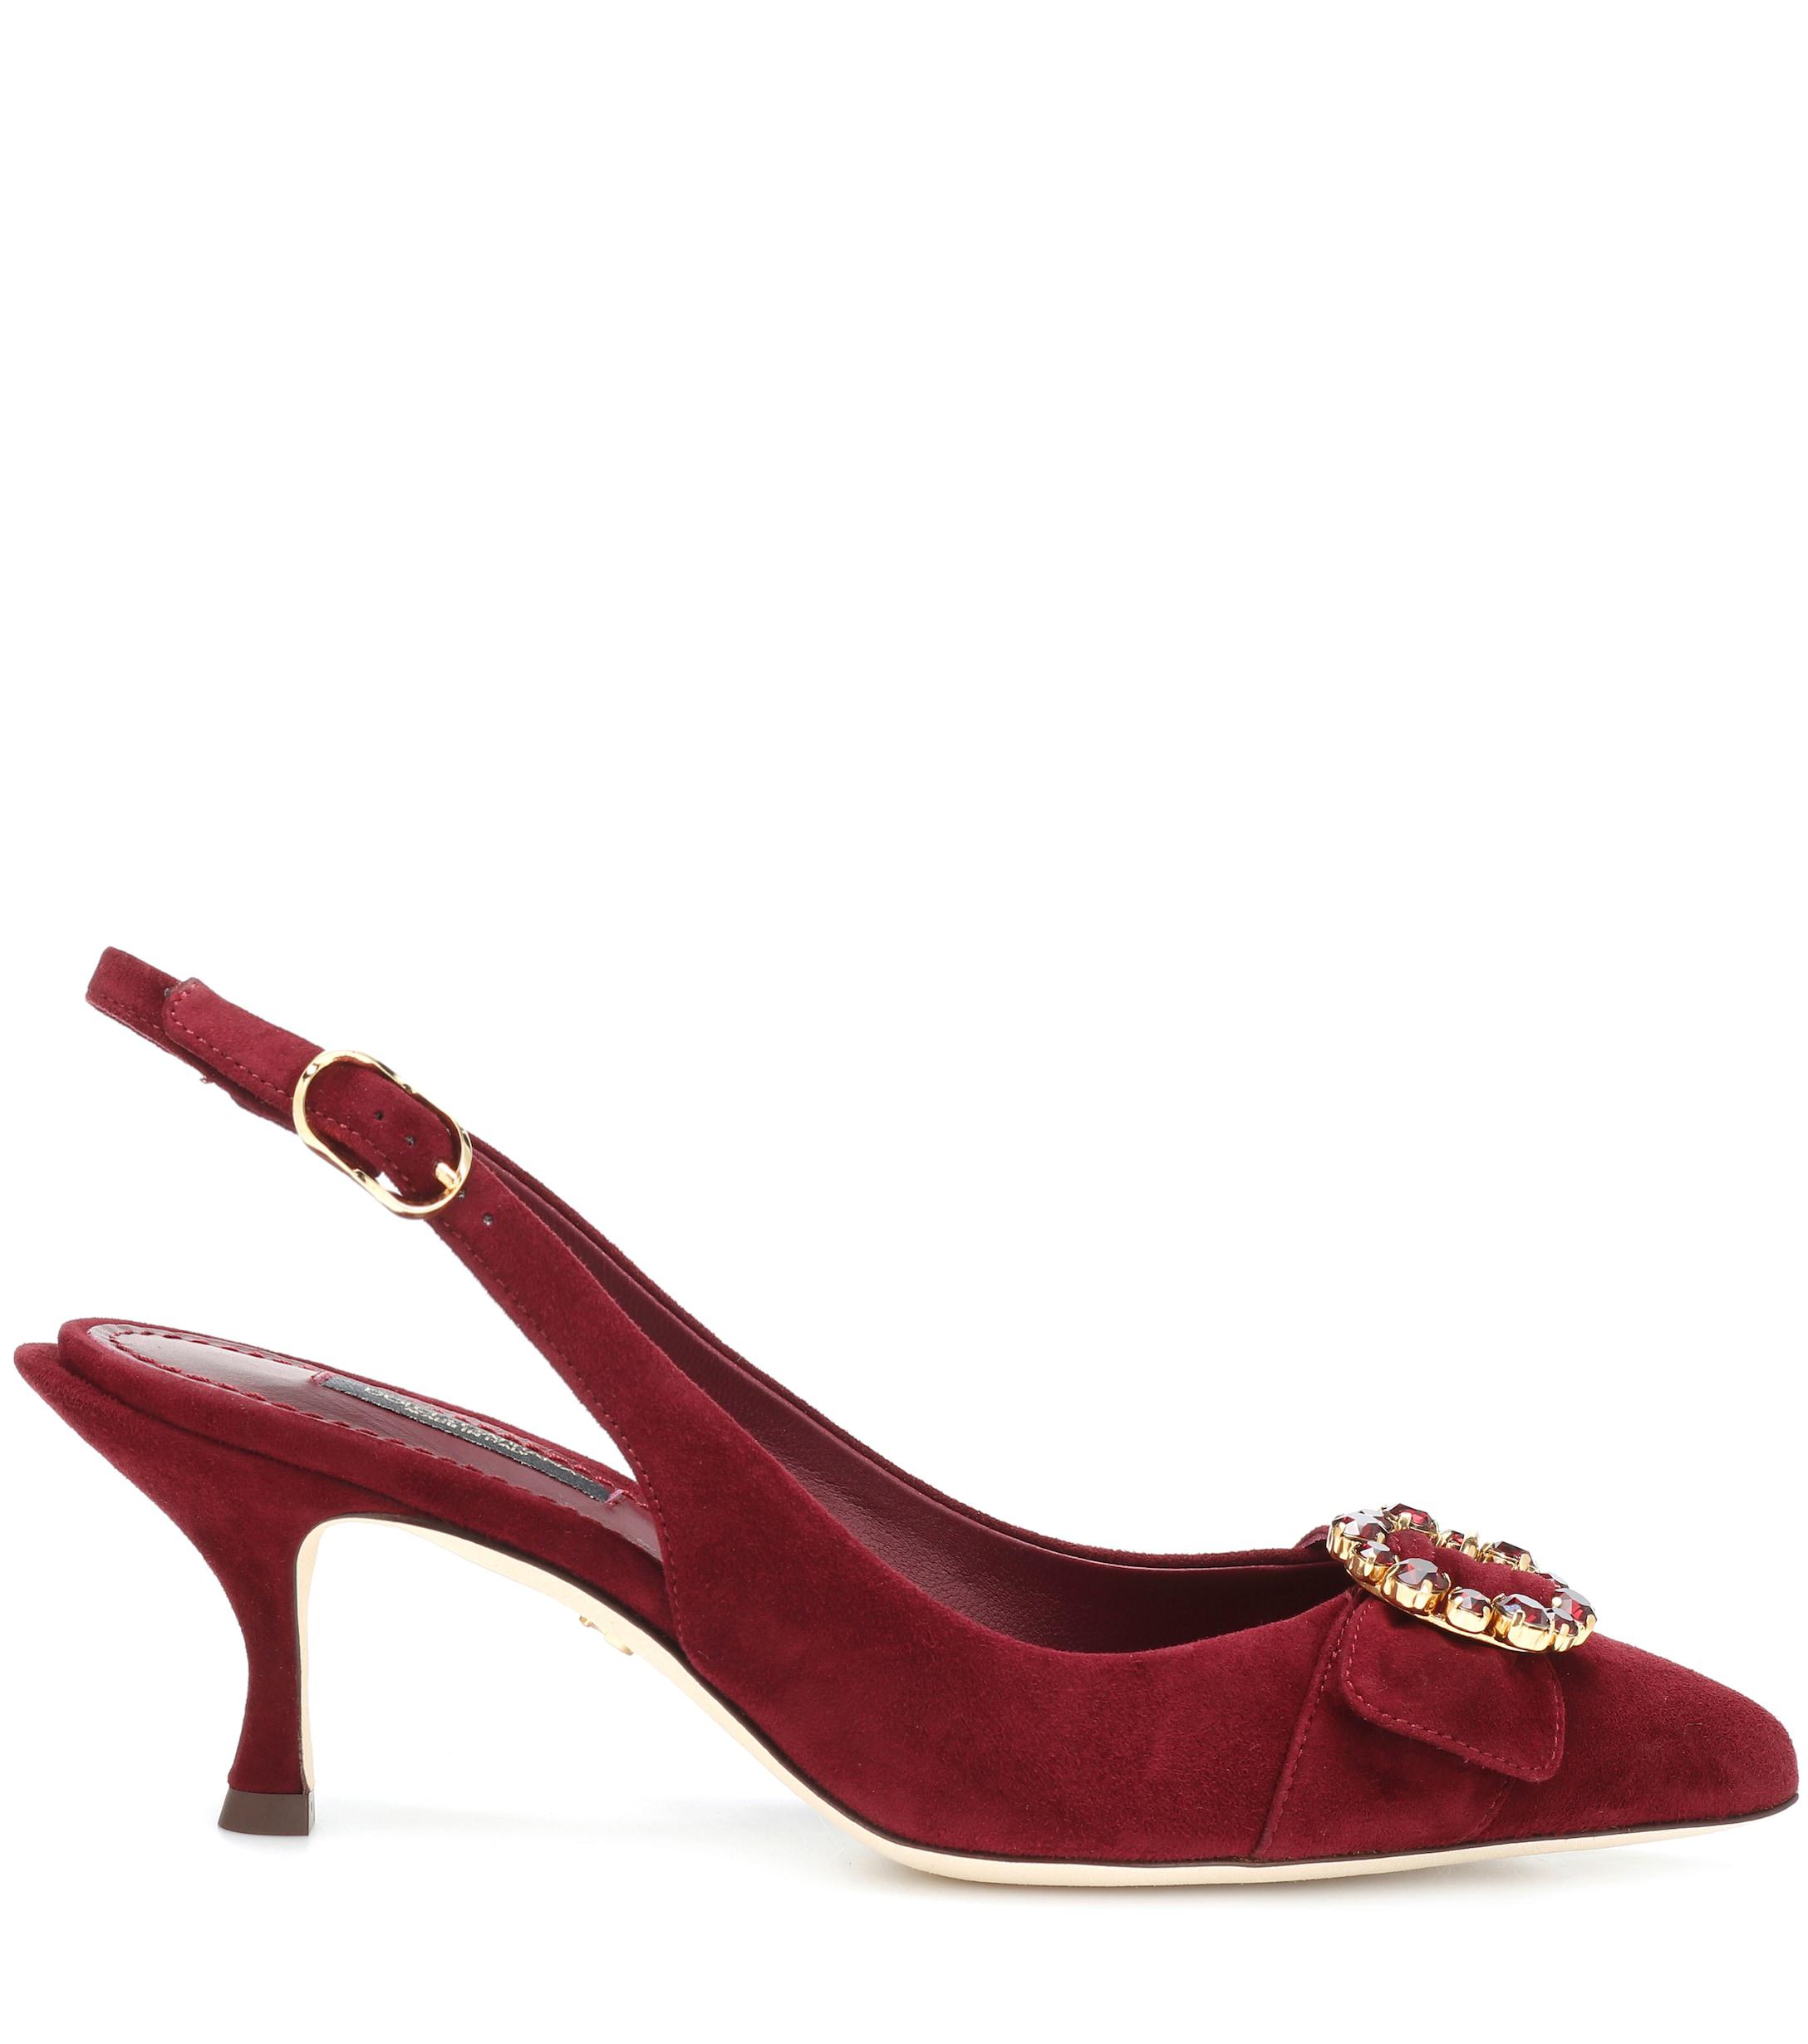 Dolce & Gabbana Embellished Suede Slingback Pumps in Red - Lyst